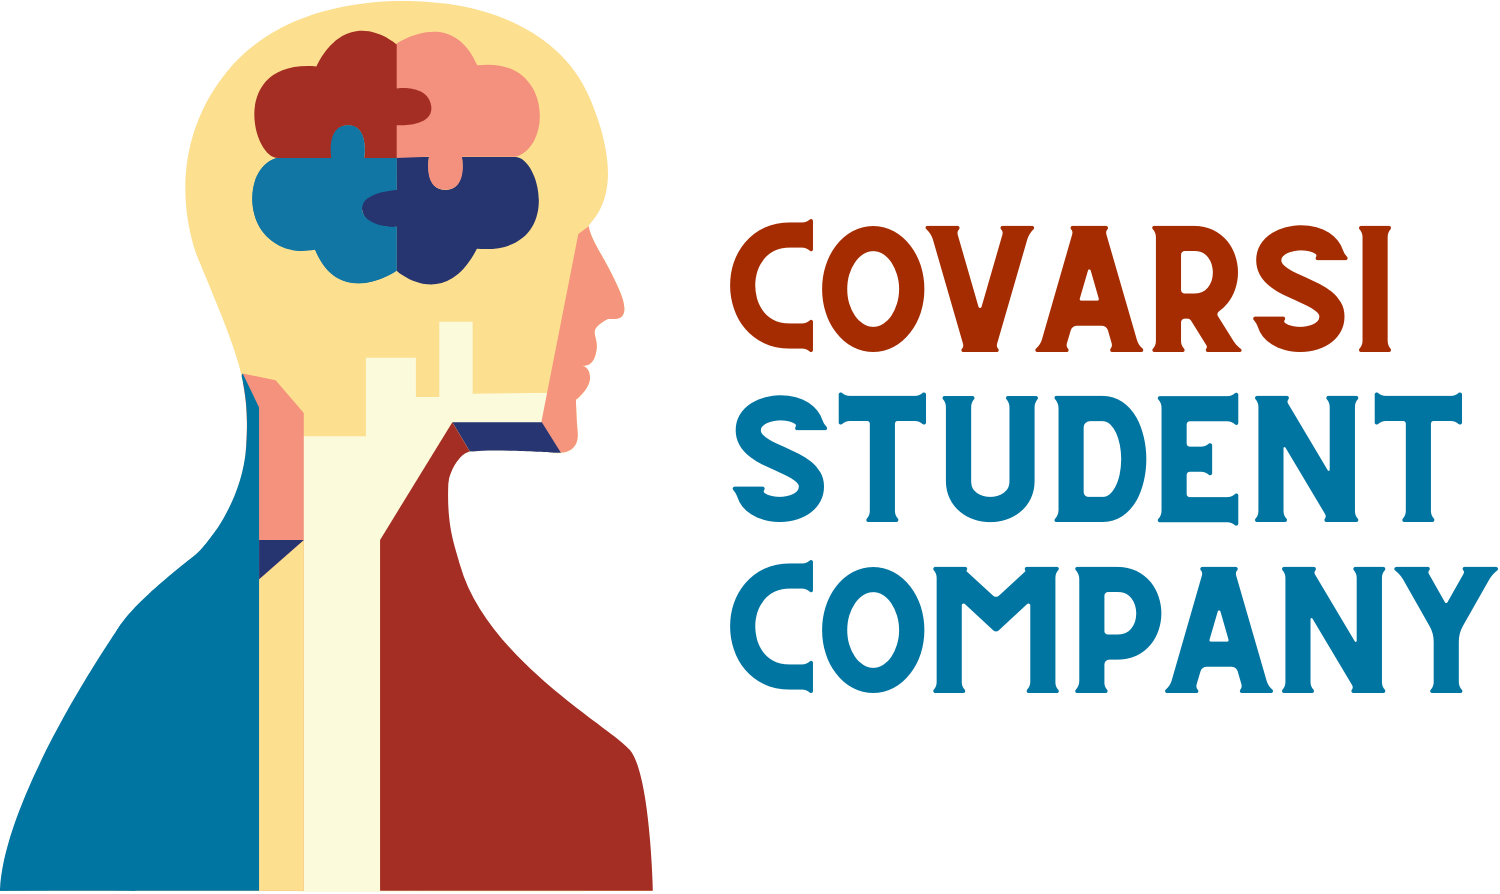 COVARSI Student Company